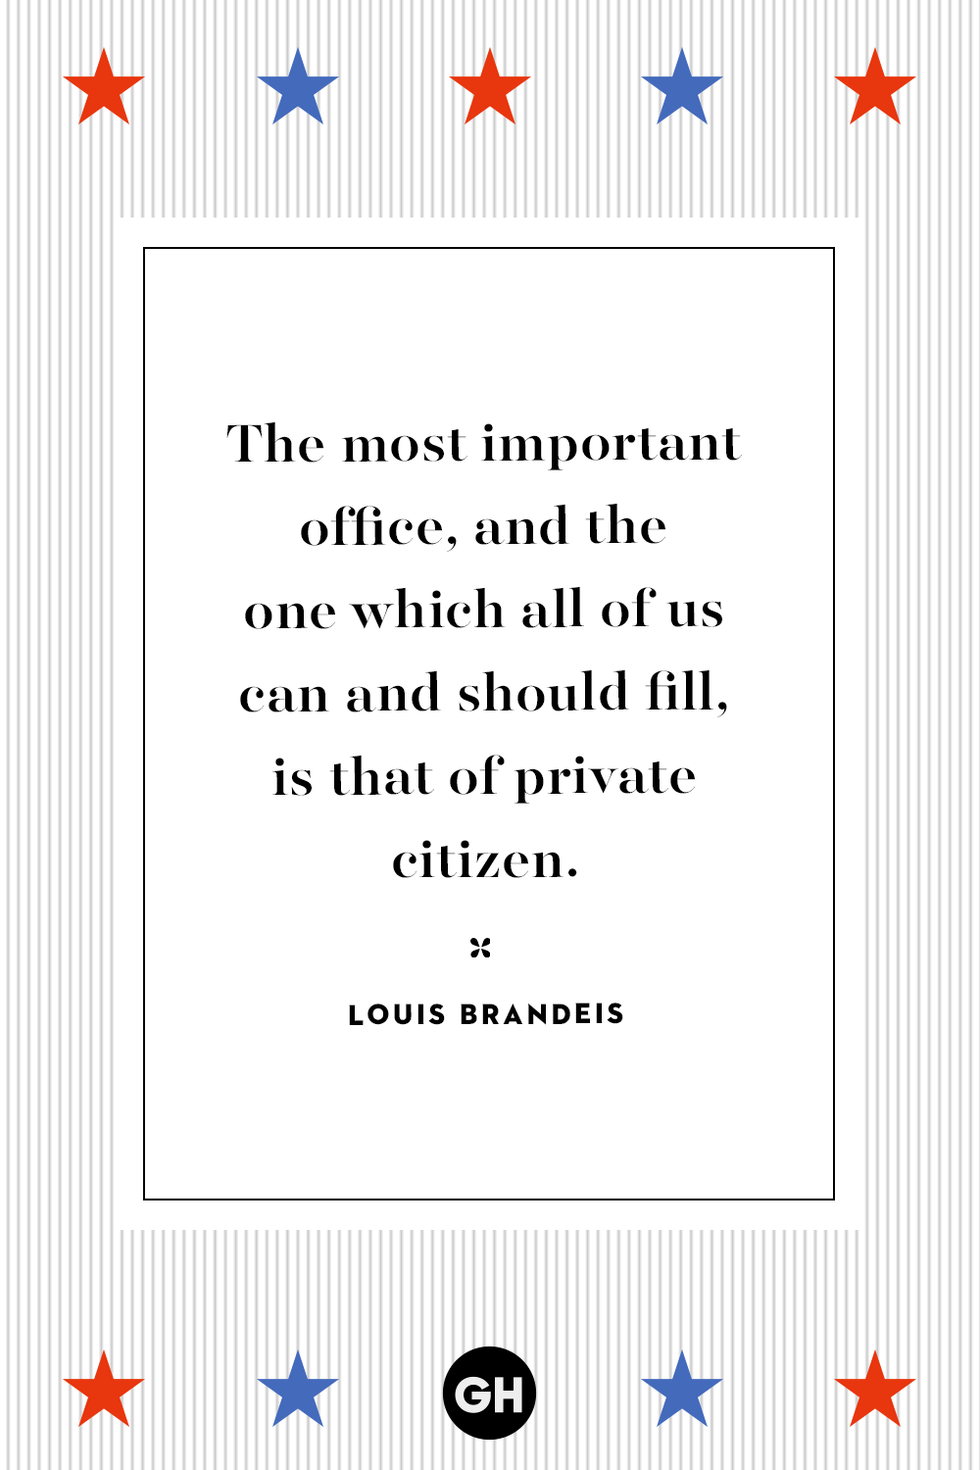 Voting quotes - election quotes - Louis Brandeis